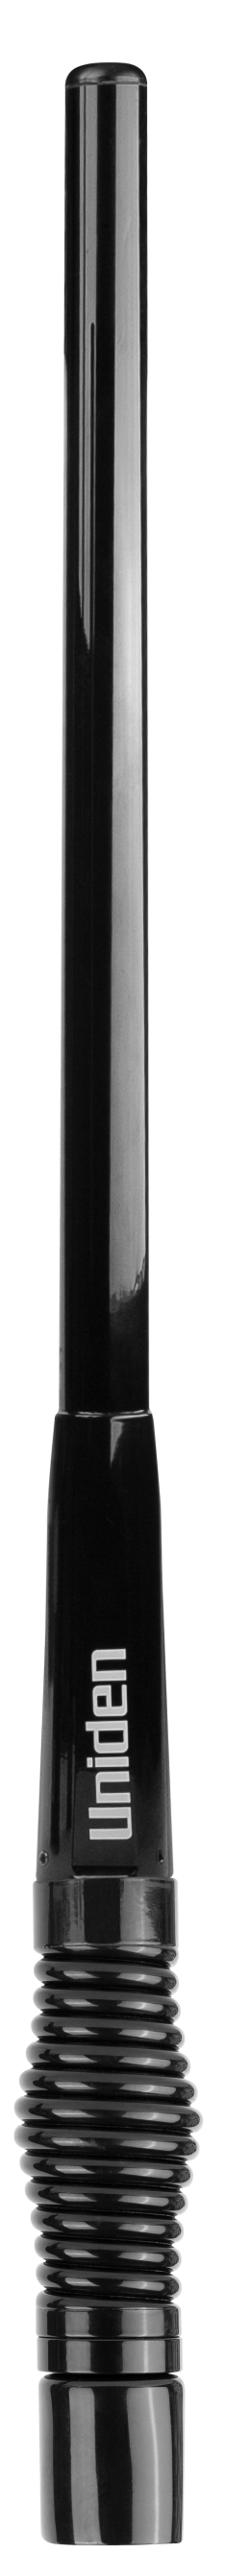 Heavy Duty Fibreglass Raydome Antenna – BLACK (3.0 dBi Gain)